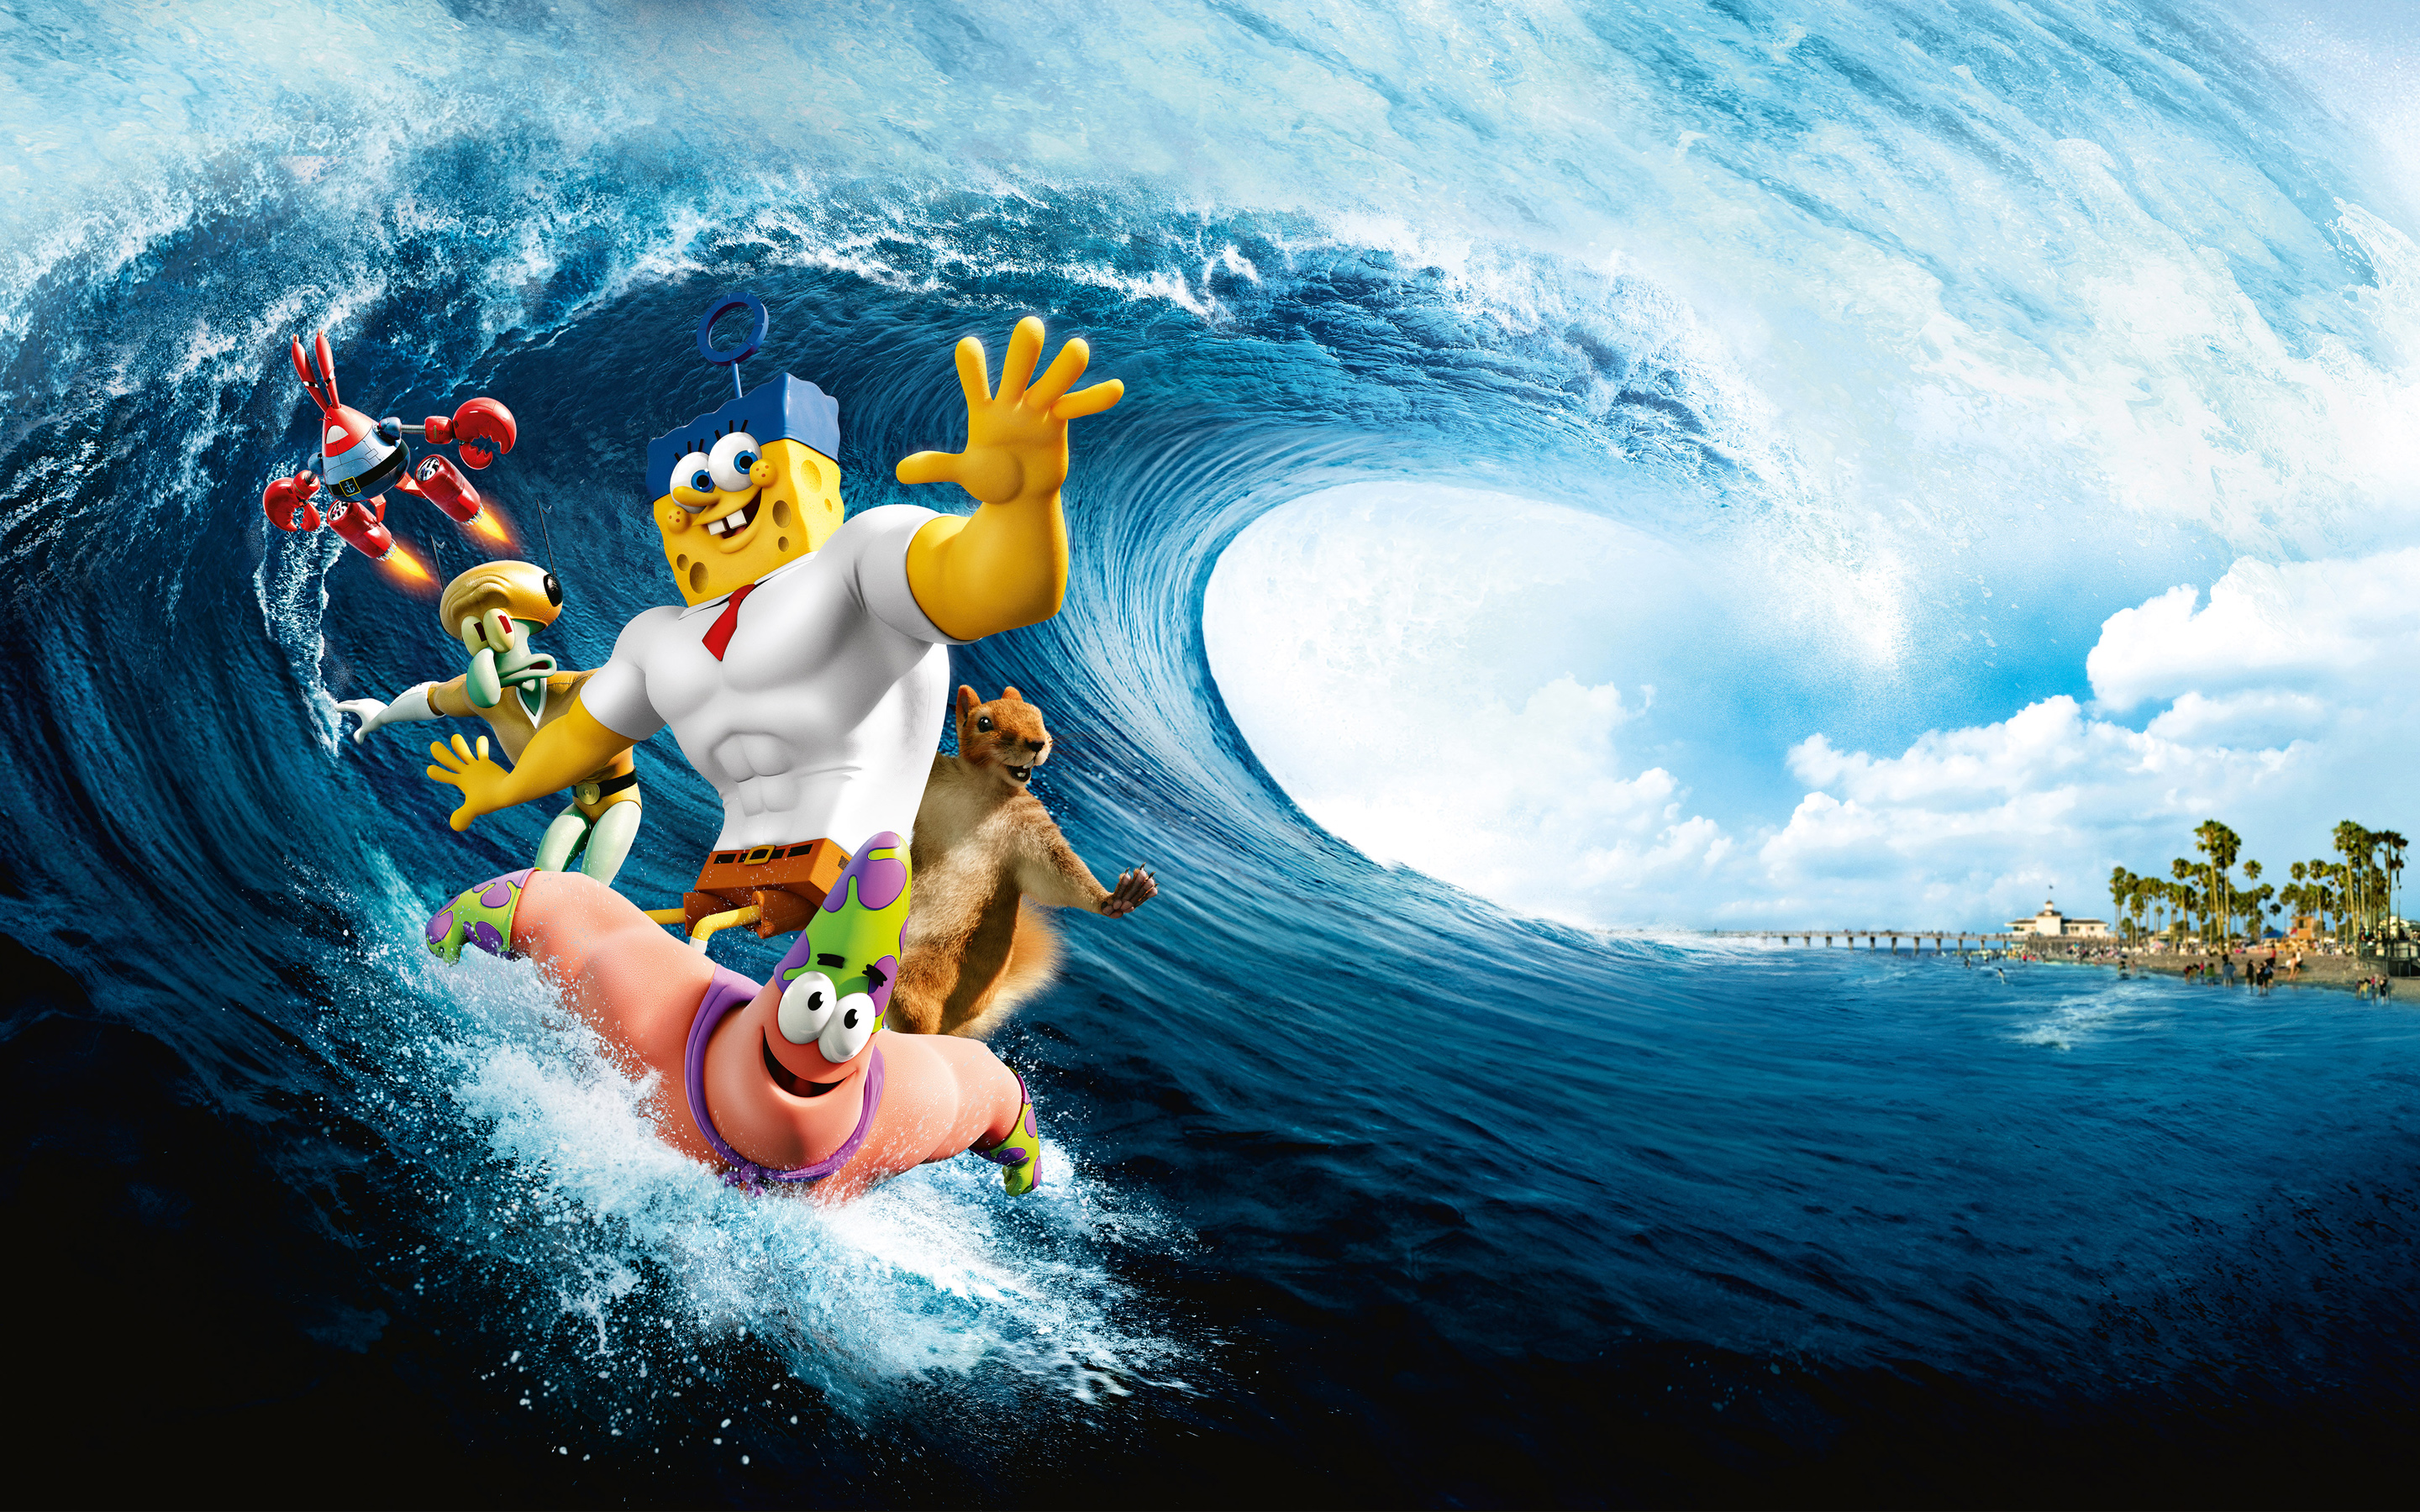 spongebob wallpaper,animated cartoon,illustration,wind wave,surfing,fun